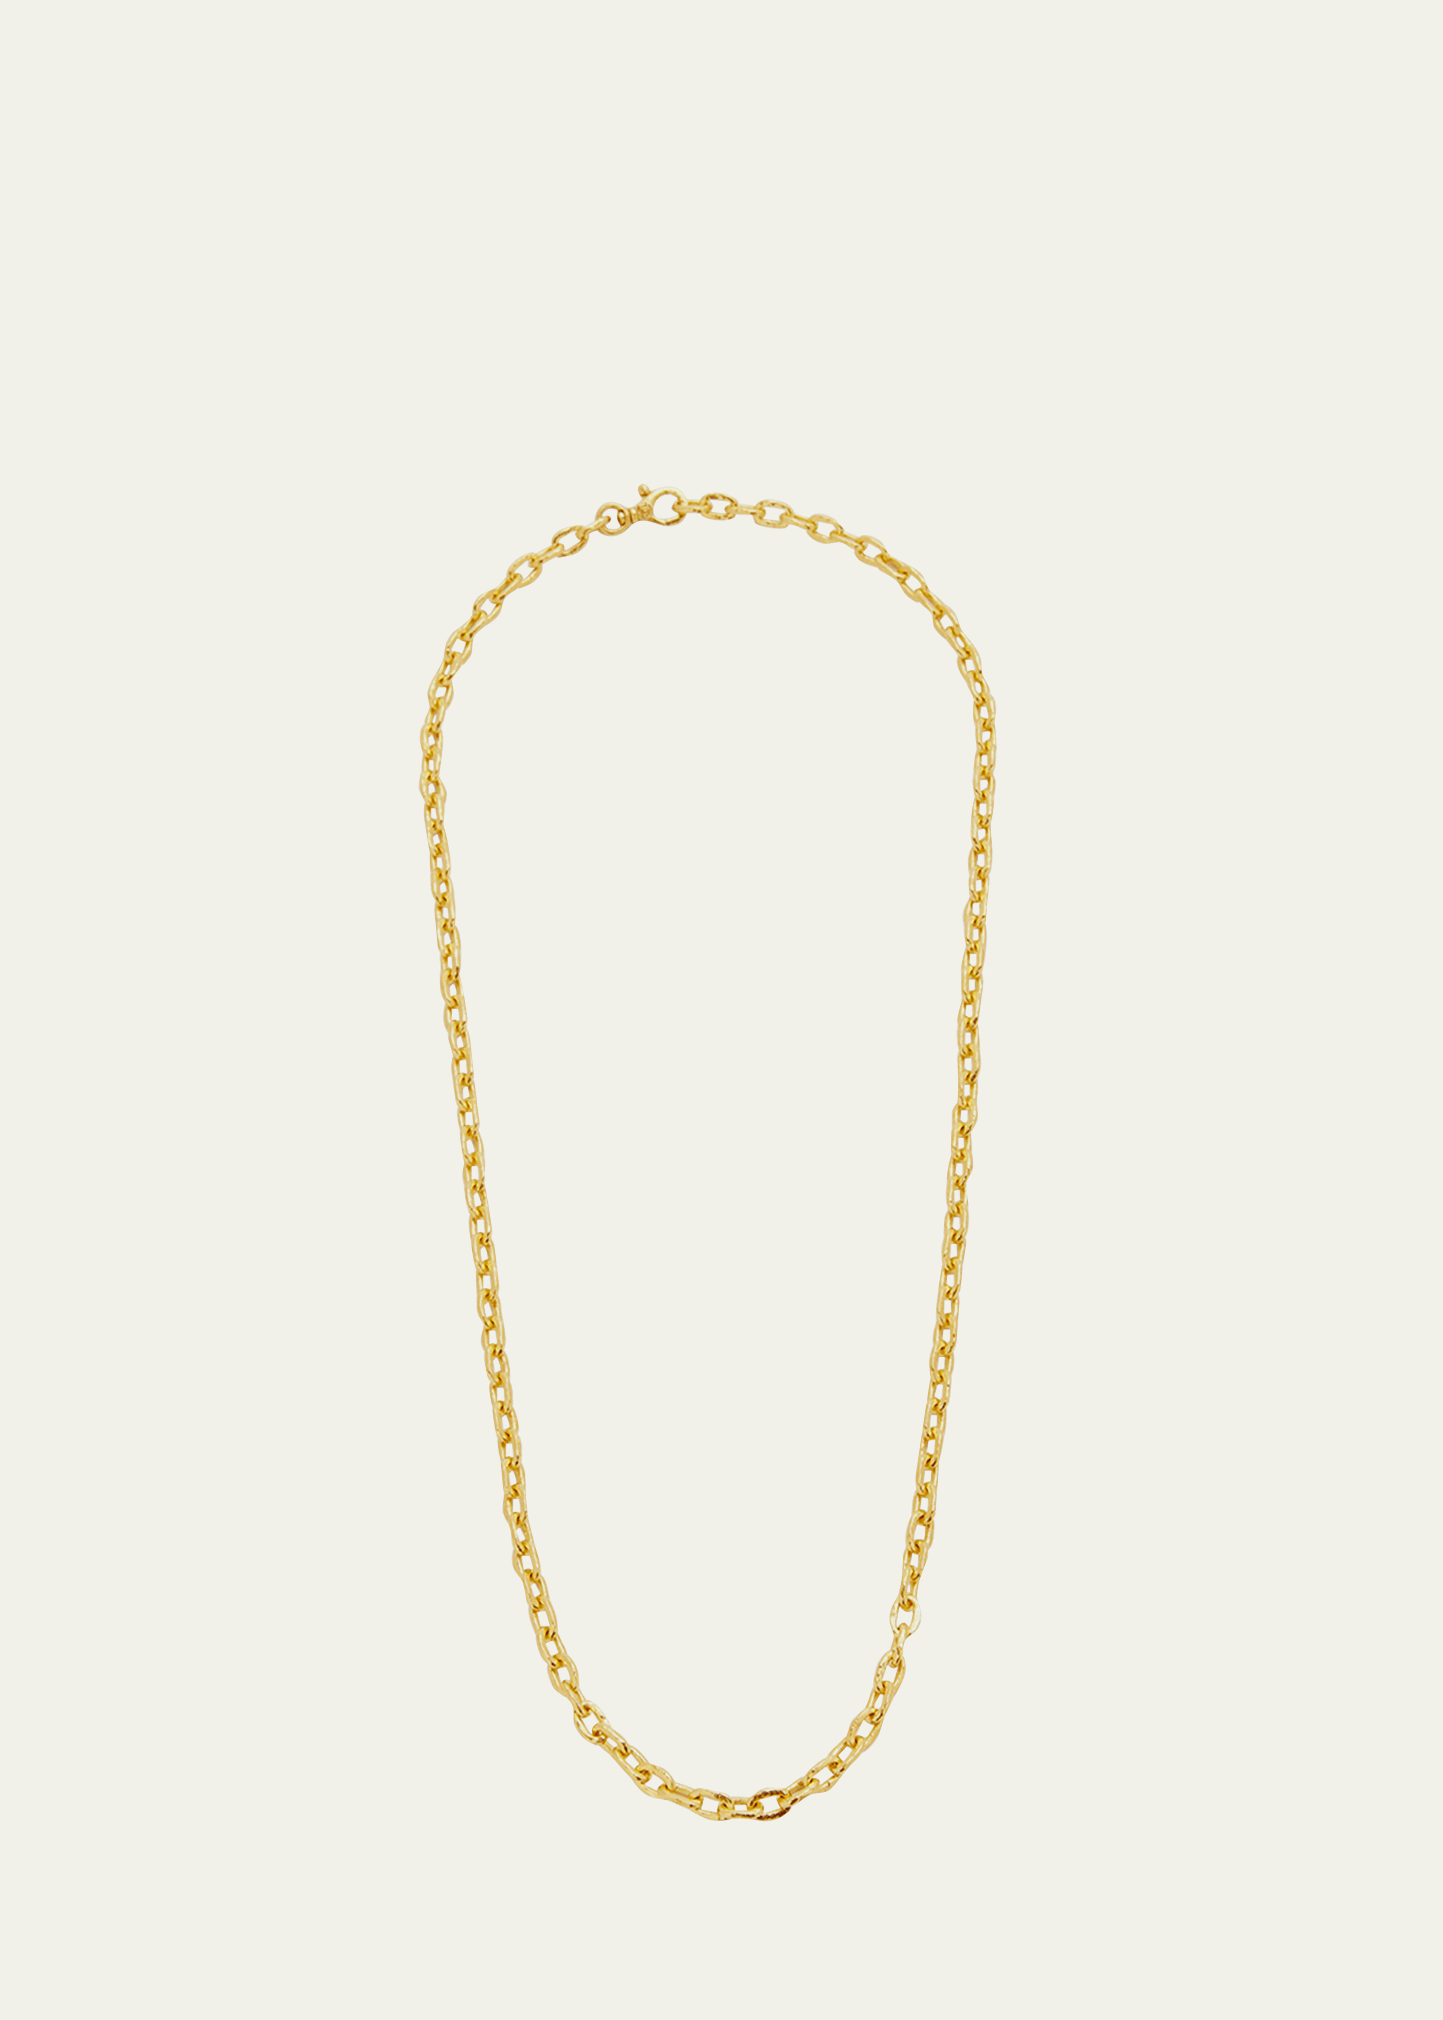 Gurhan Men's 24K Yellow Gold Cable Chain Necklace, 24"L